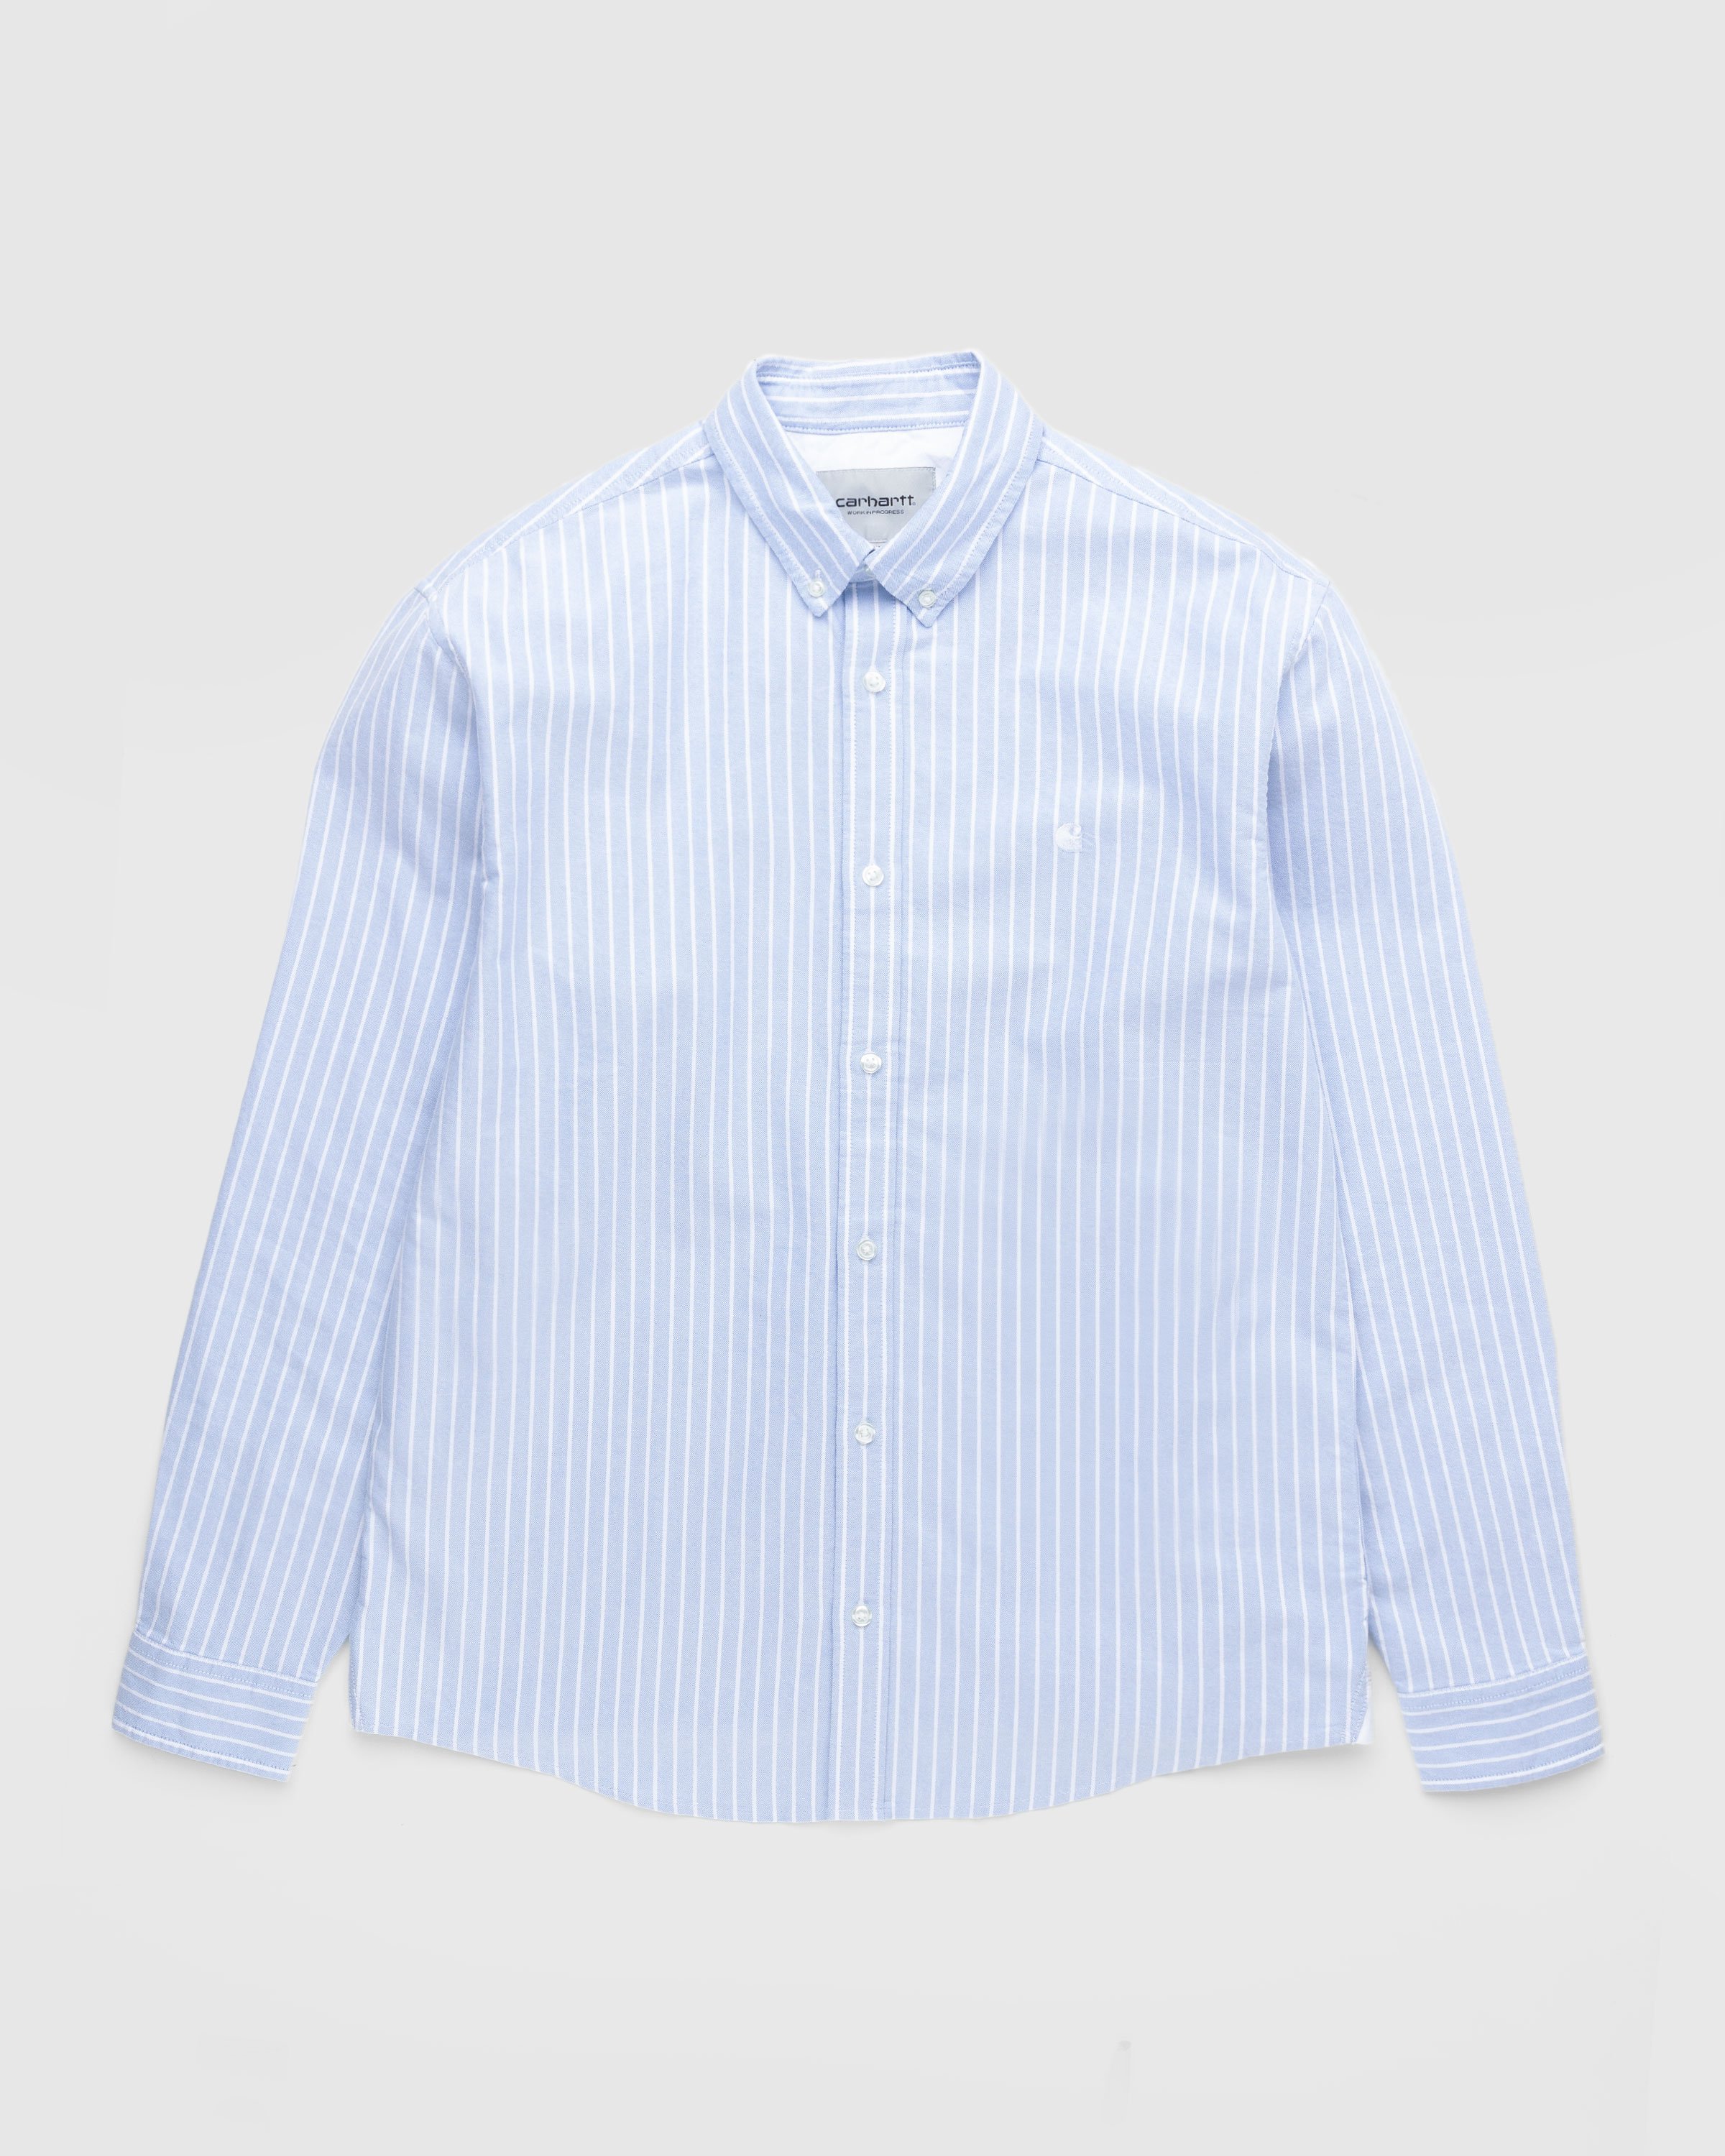 Carhartt WIP - Dabney Stripe Shirt Bleach/White - Clothing - Blue - Image 1